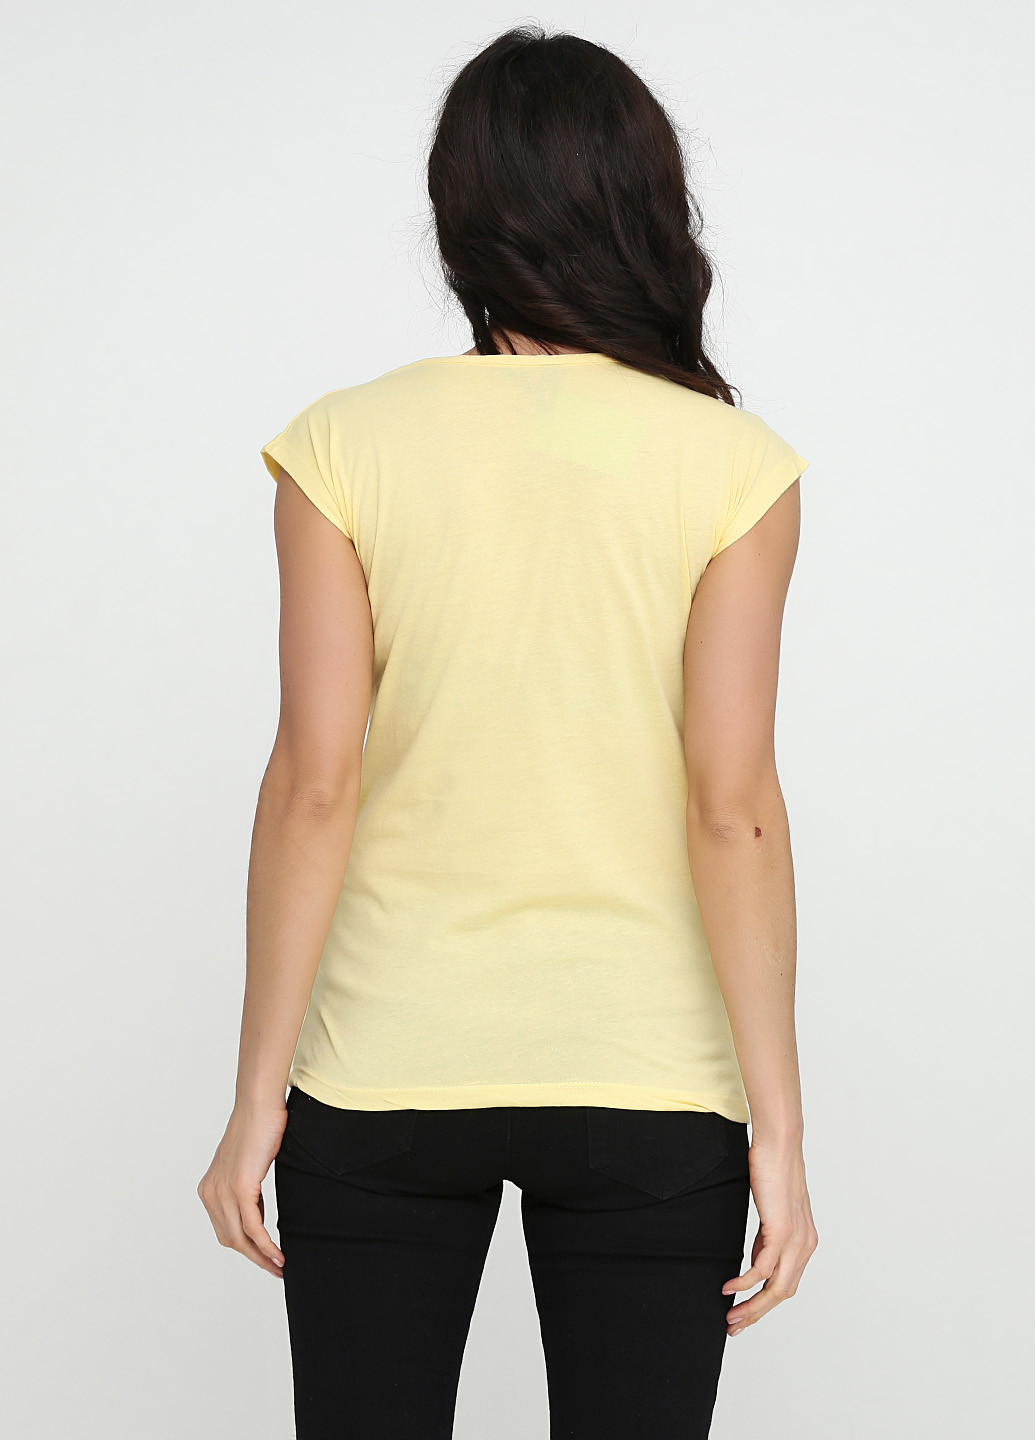 Желтая летняя футболка Spora